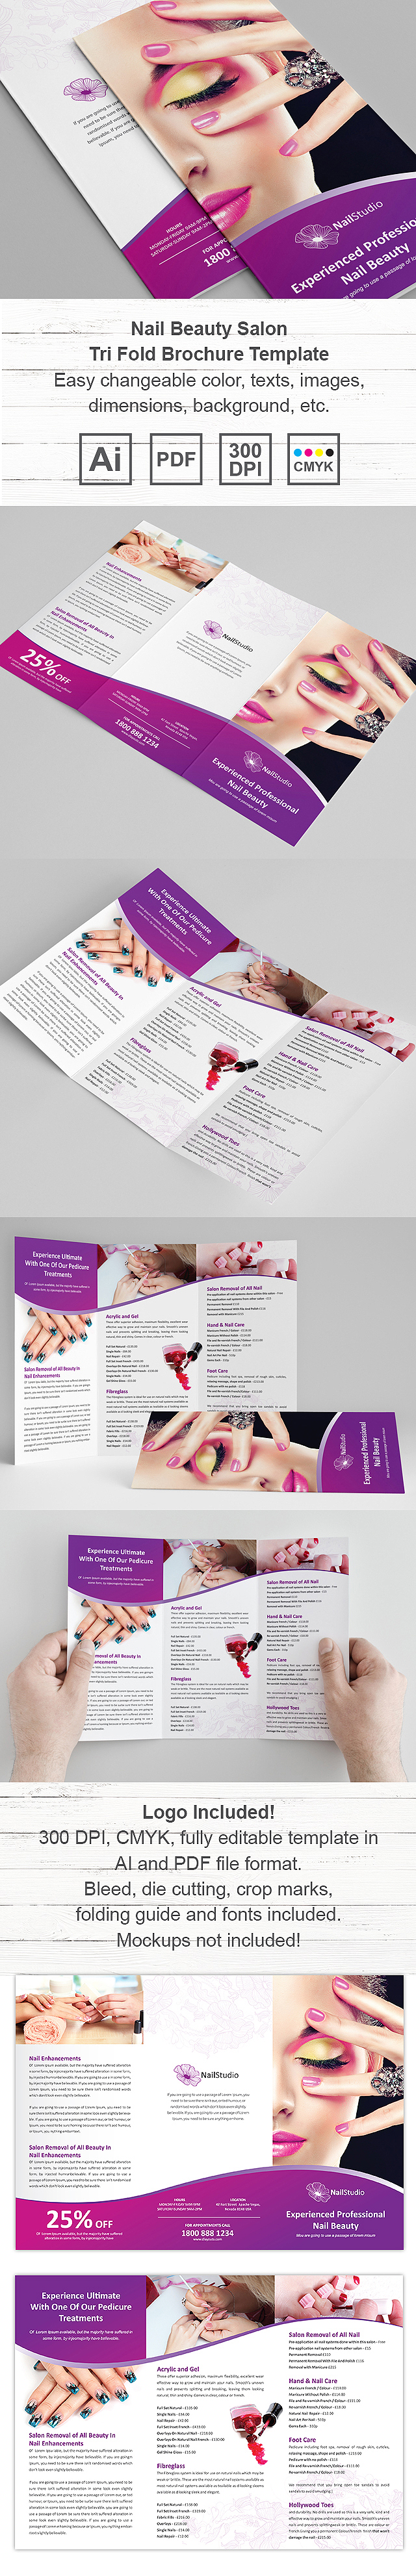 Nail Beauty Salon Tri Fold Brochure Template